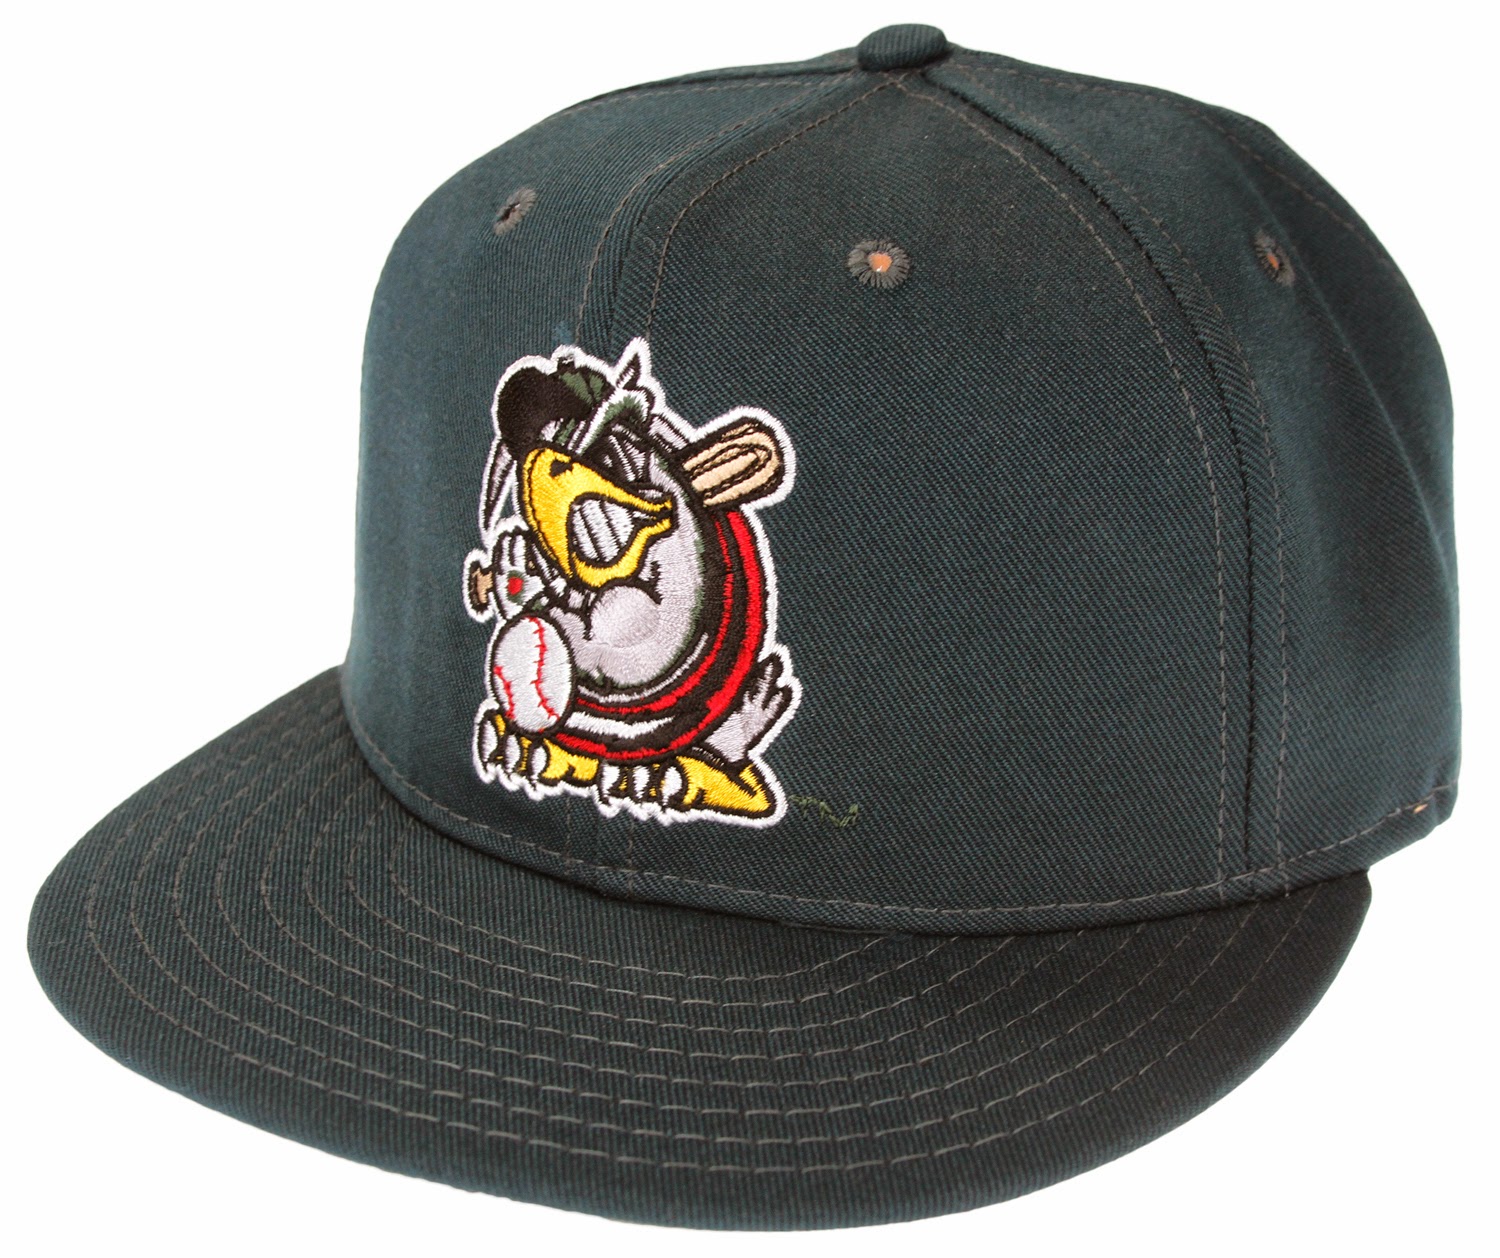 MiLB Minor League South Bend Silver Hawks Practice Baseball Cap Hat | eBay